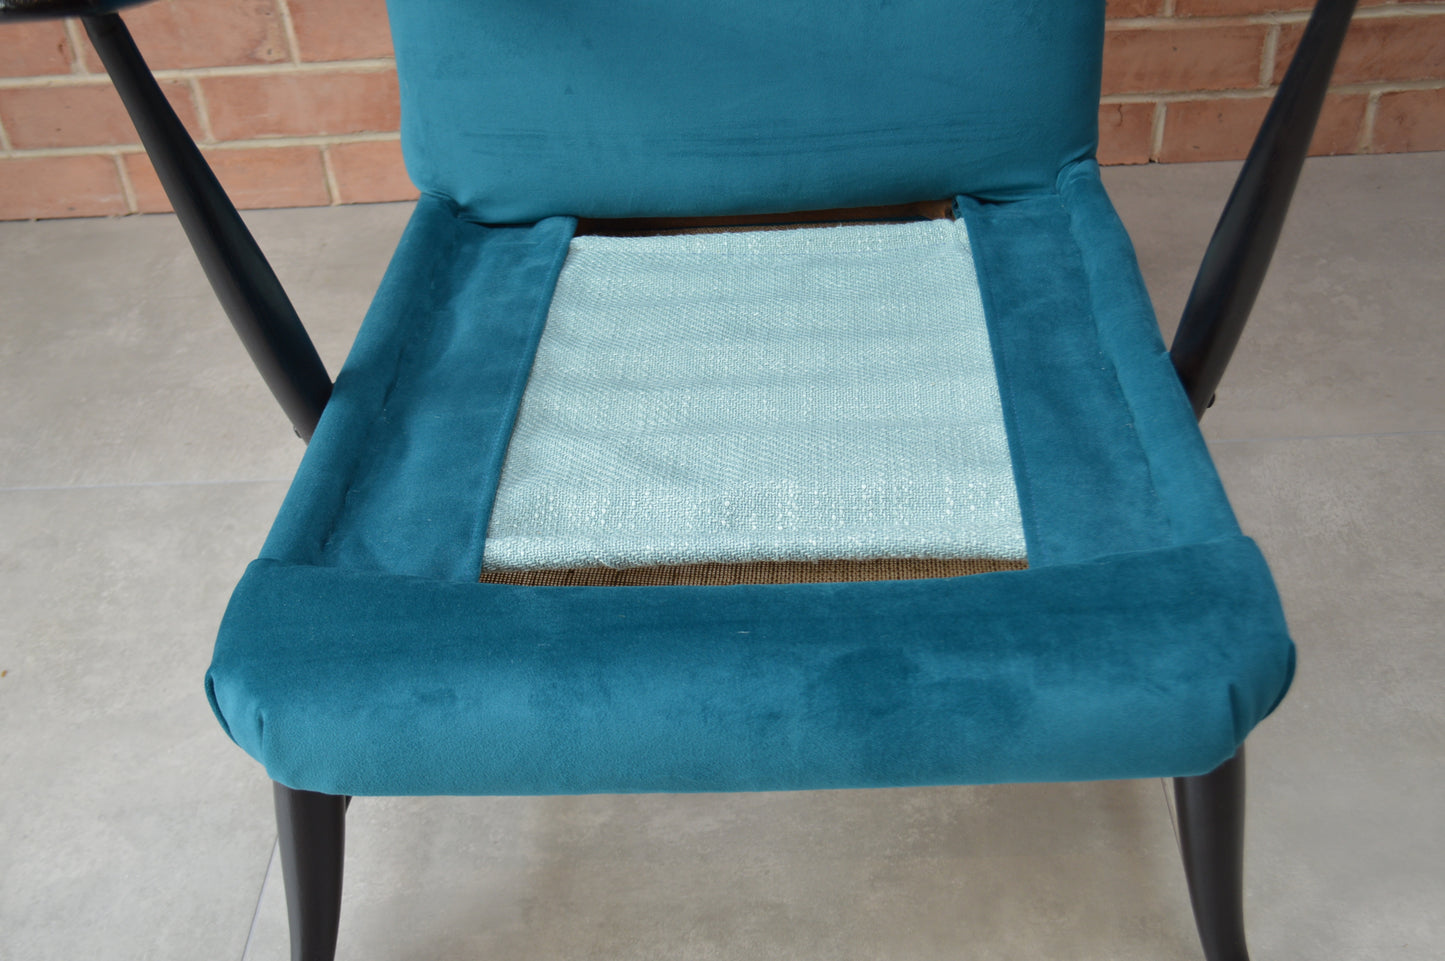 Ercol Easy Chair Model 245 with Teal Velvet cushion, 1950's